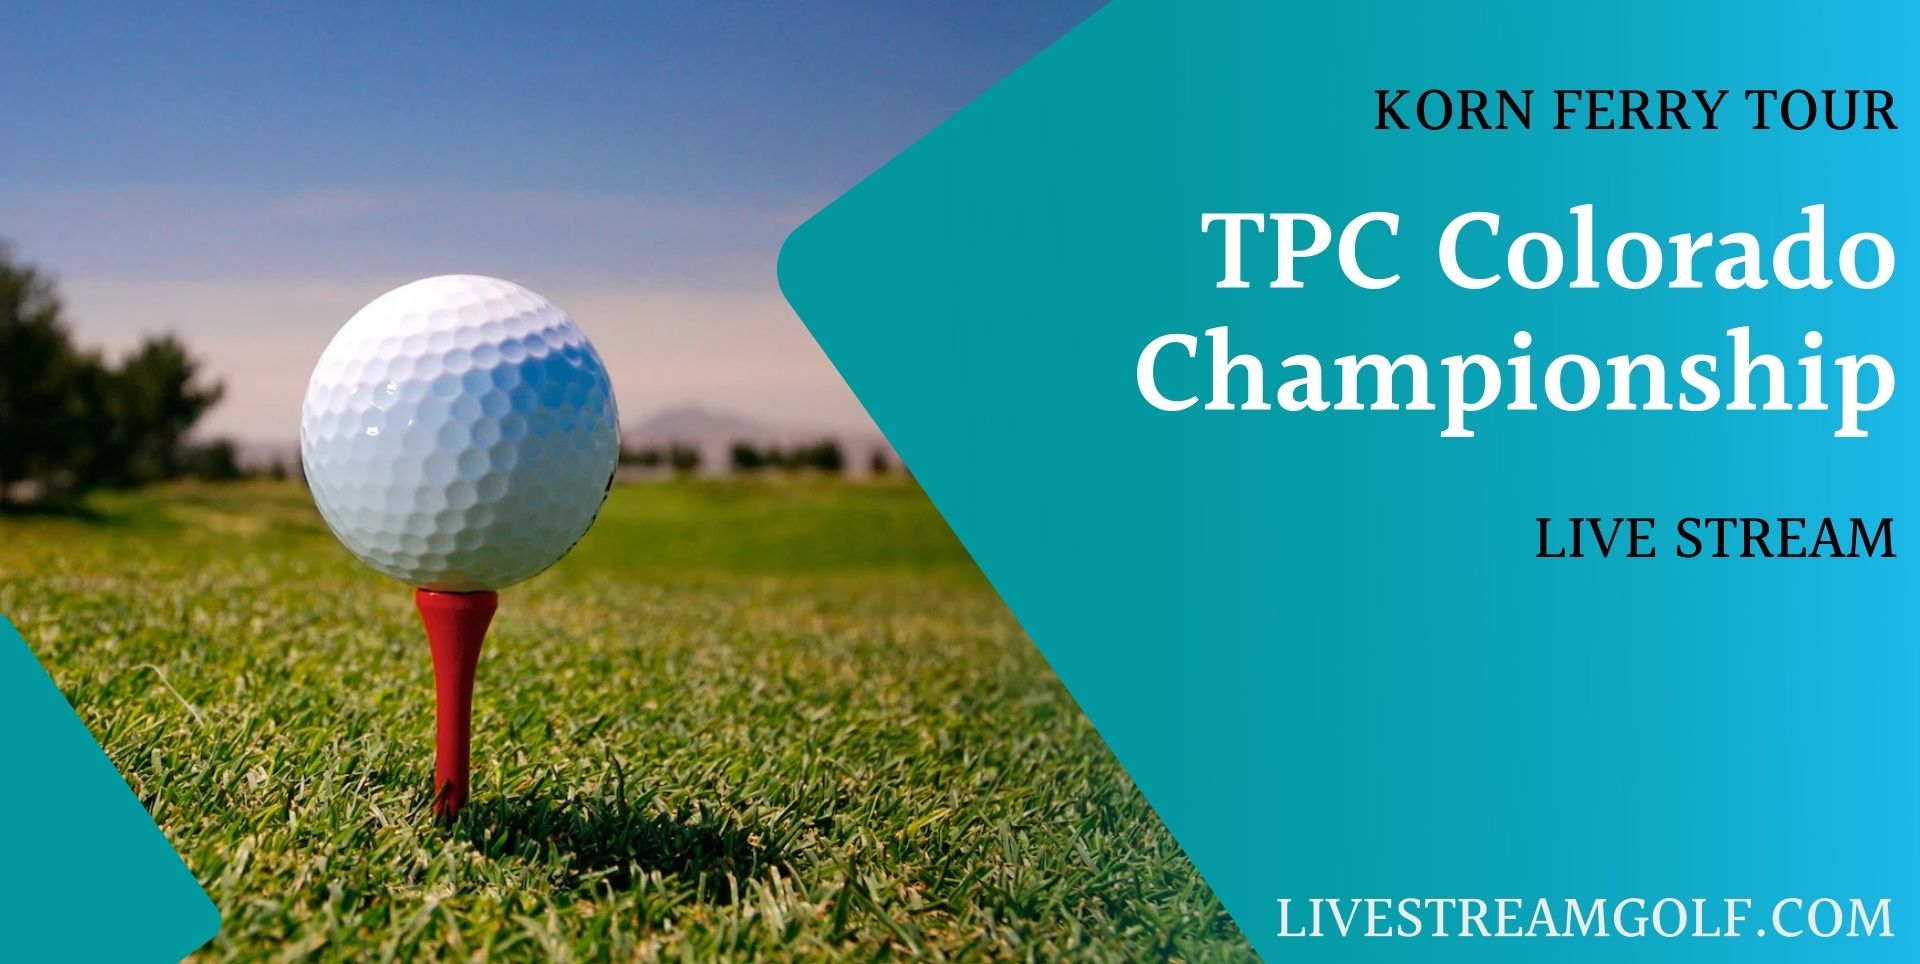 TPC Colorado Championship Day 2 Live Stream: Korn Ferry 2022